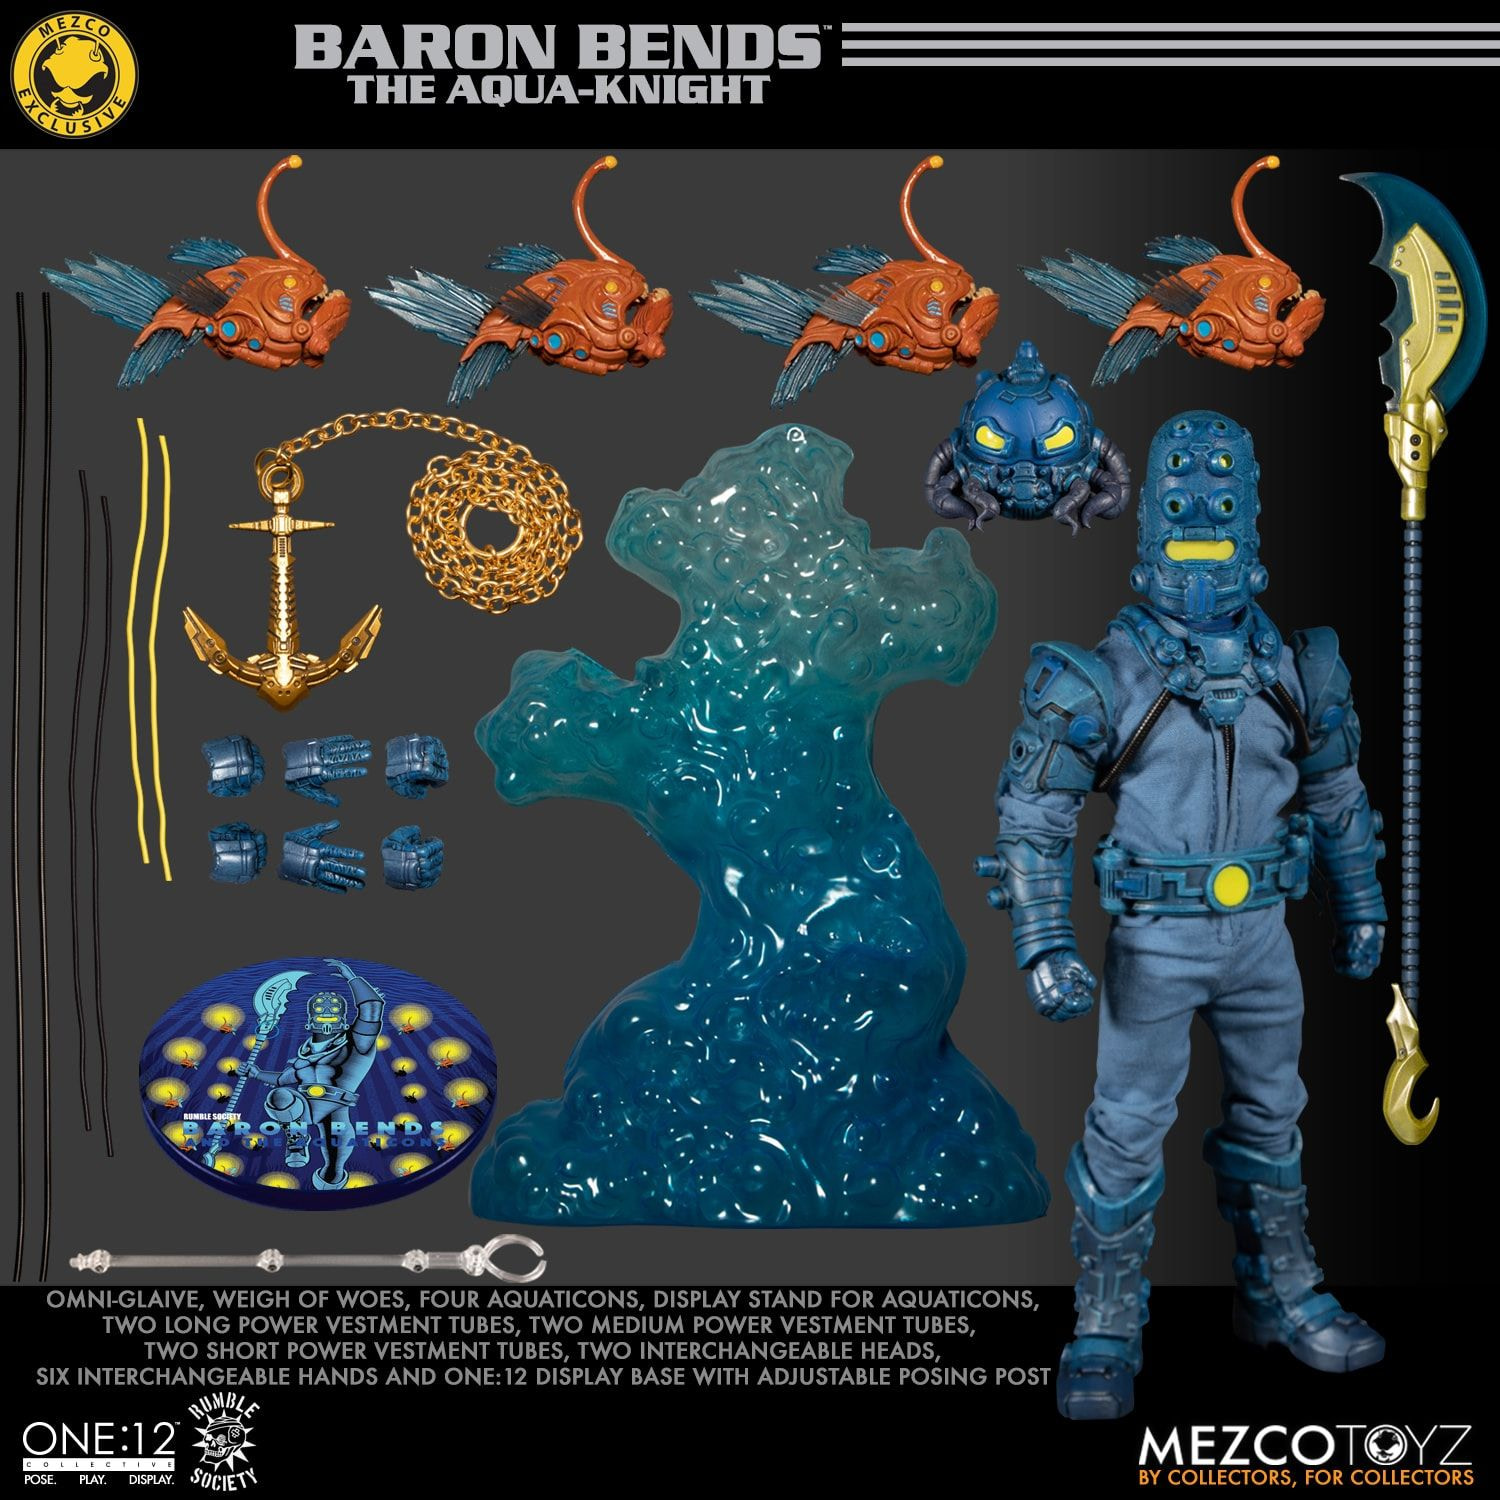 Baron Bends and the Aquaticons de Mezco Toyz